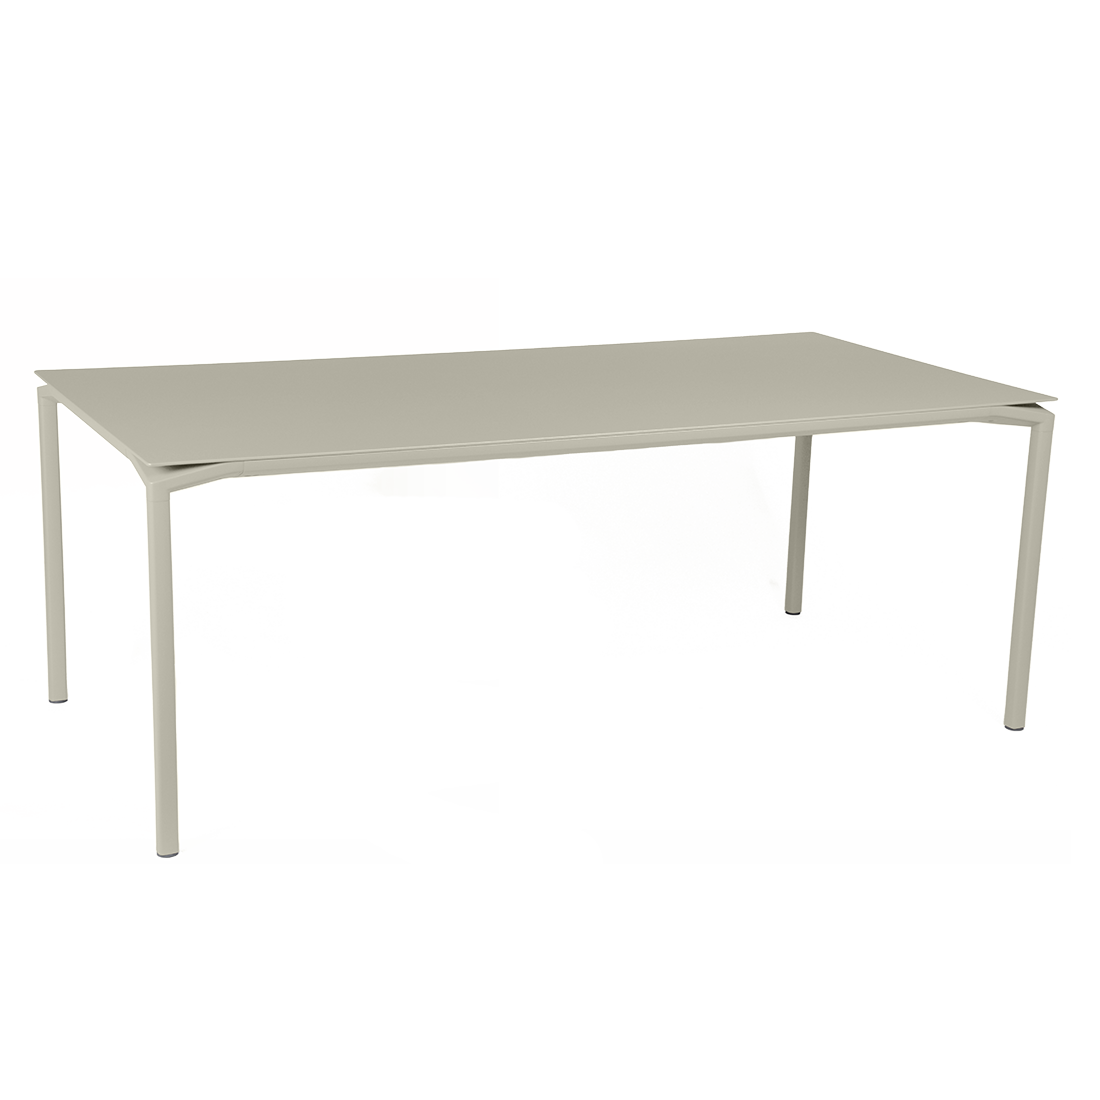 Table Calvi gris argile